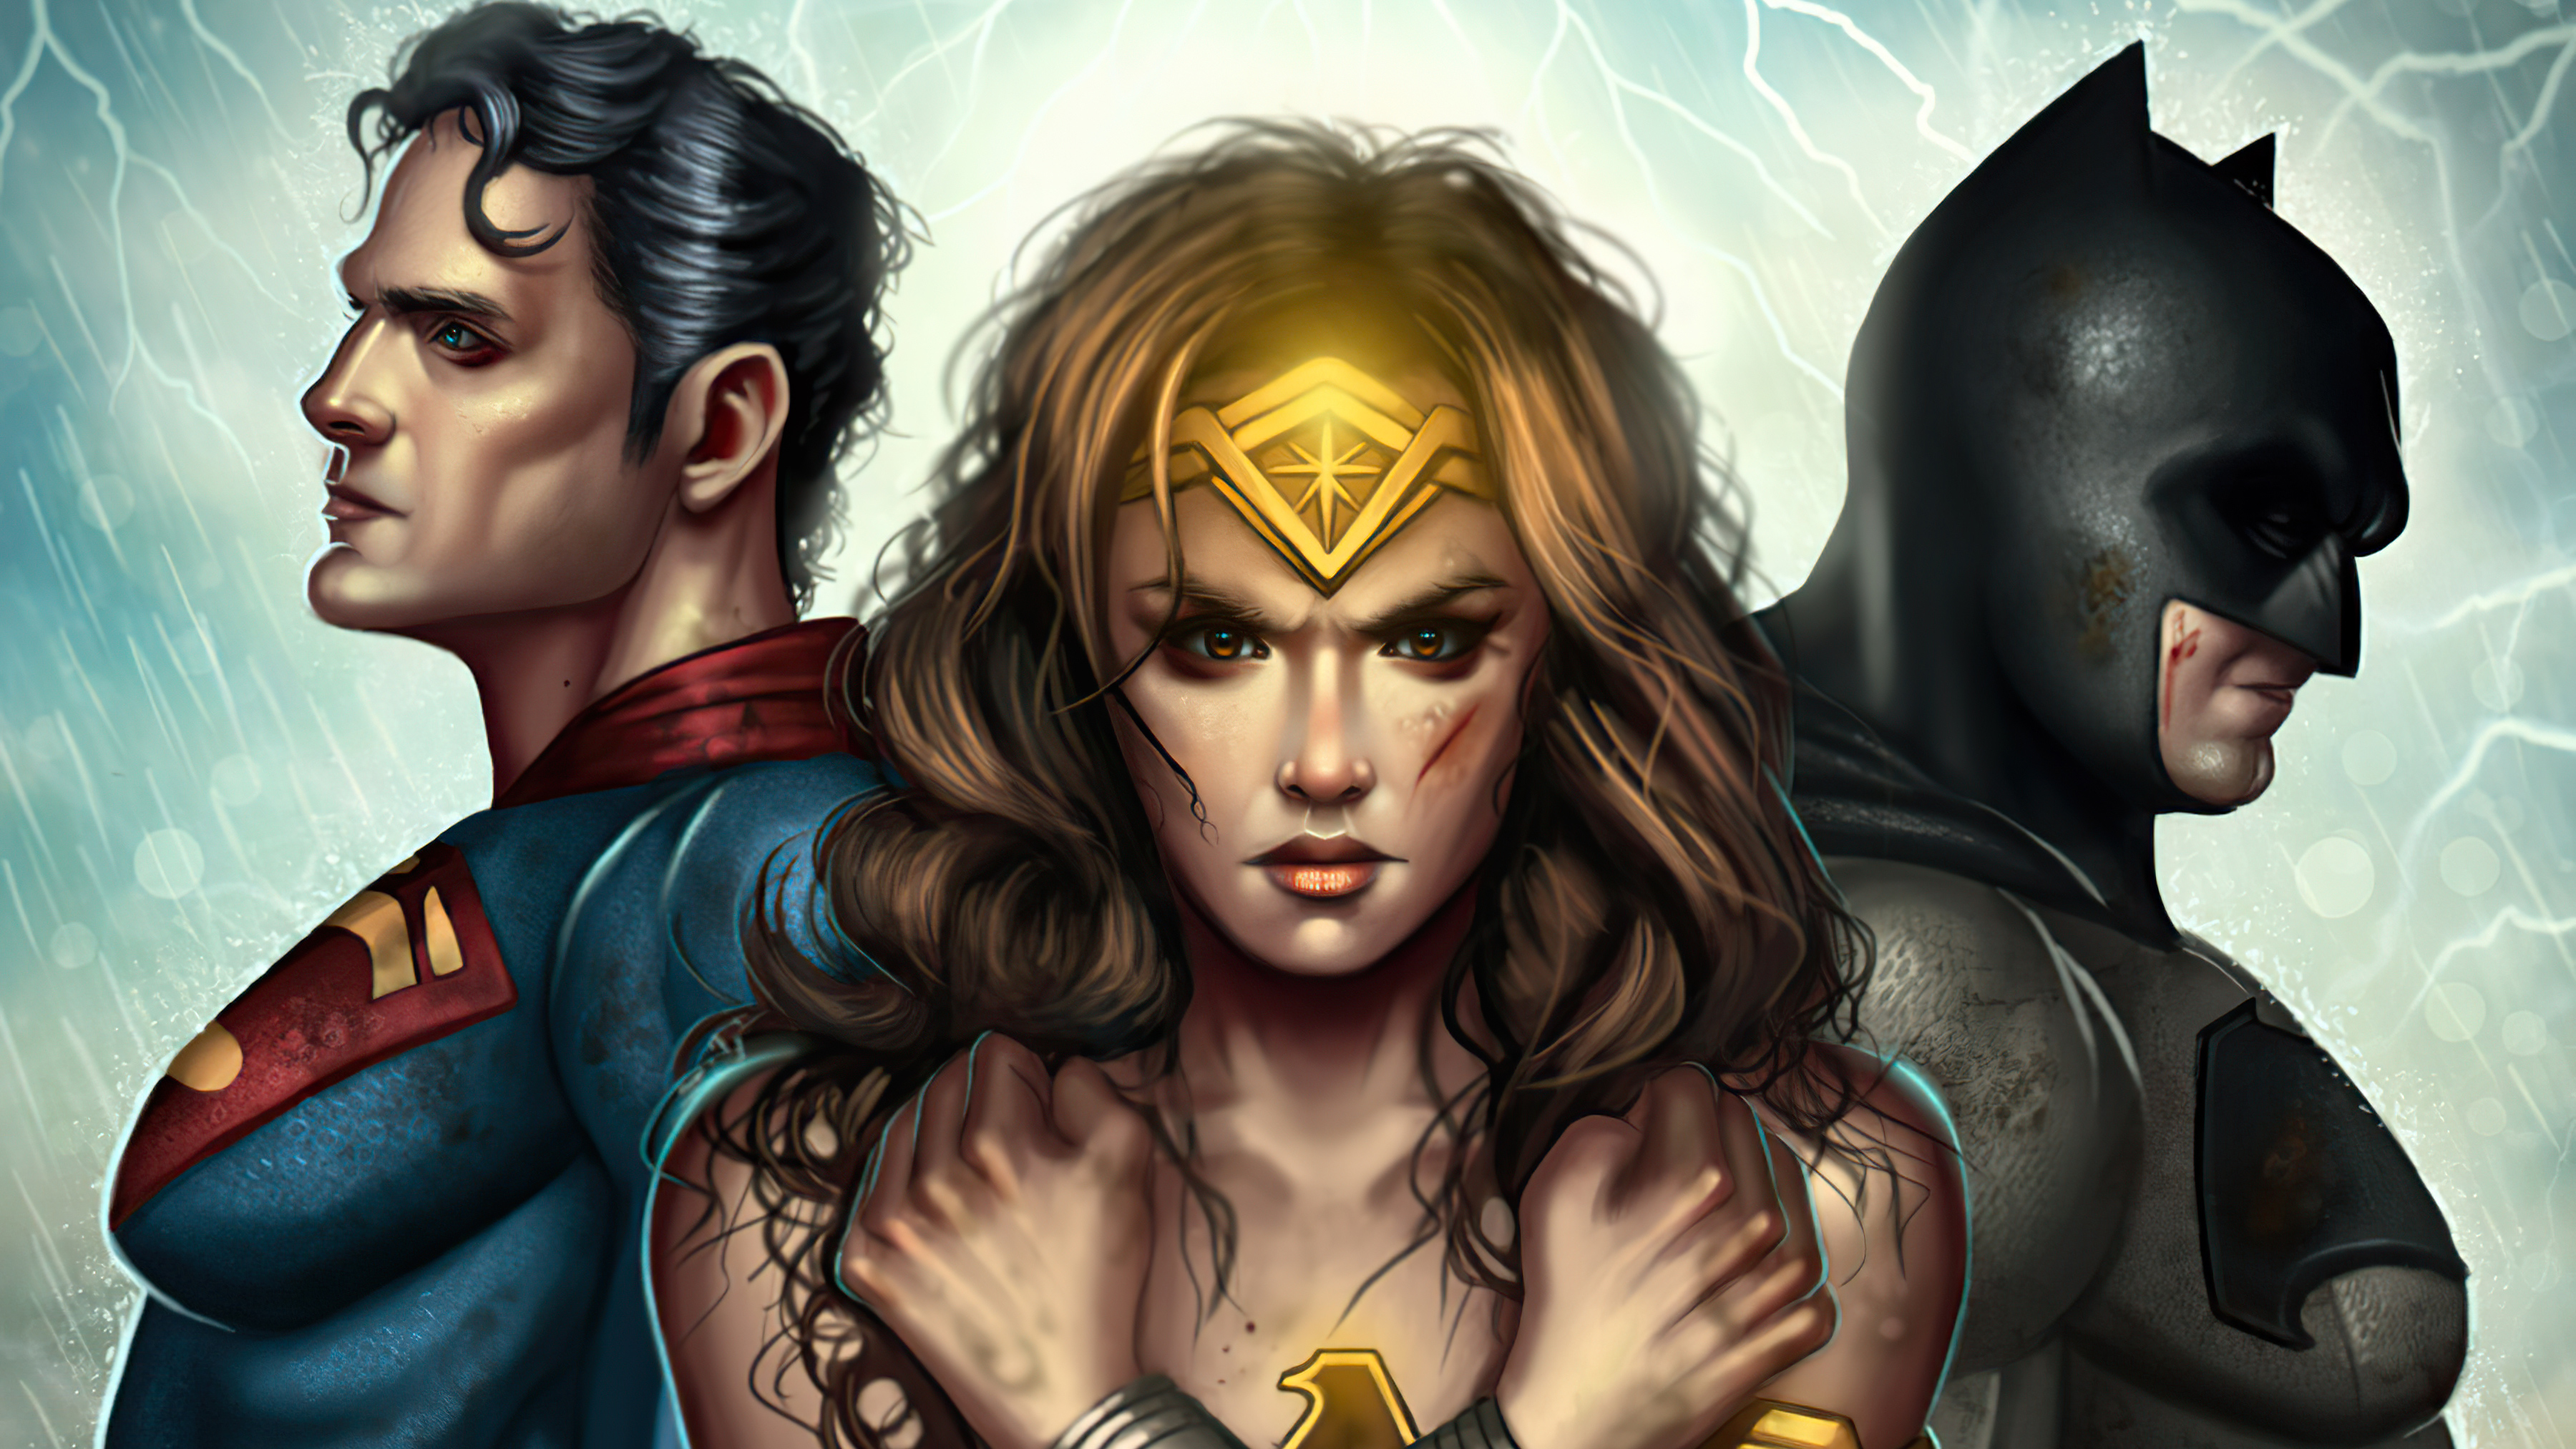 Wallpaper Batman, Wonder Woman, Superman, dc Comics, Illustration,  Background - Download Free Image